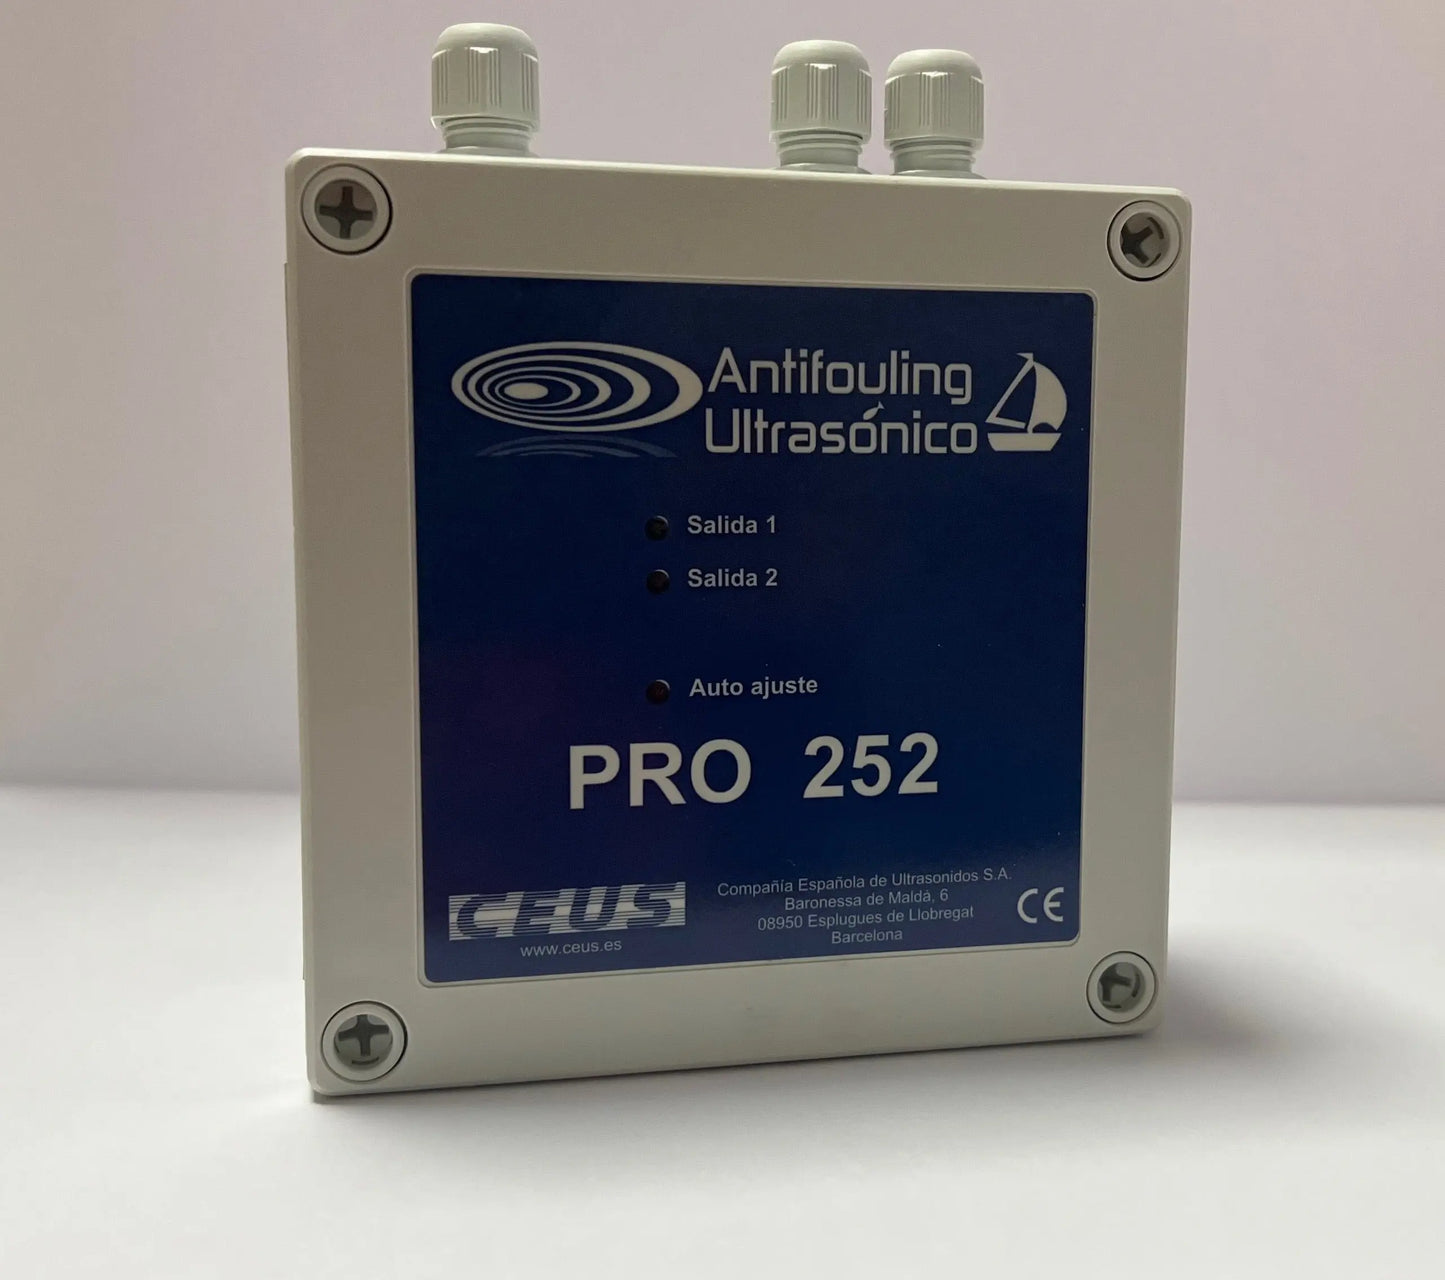 PRO 252 Antifoluling Ultrasónico